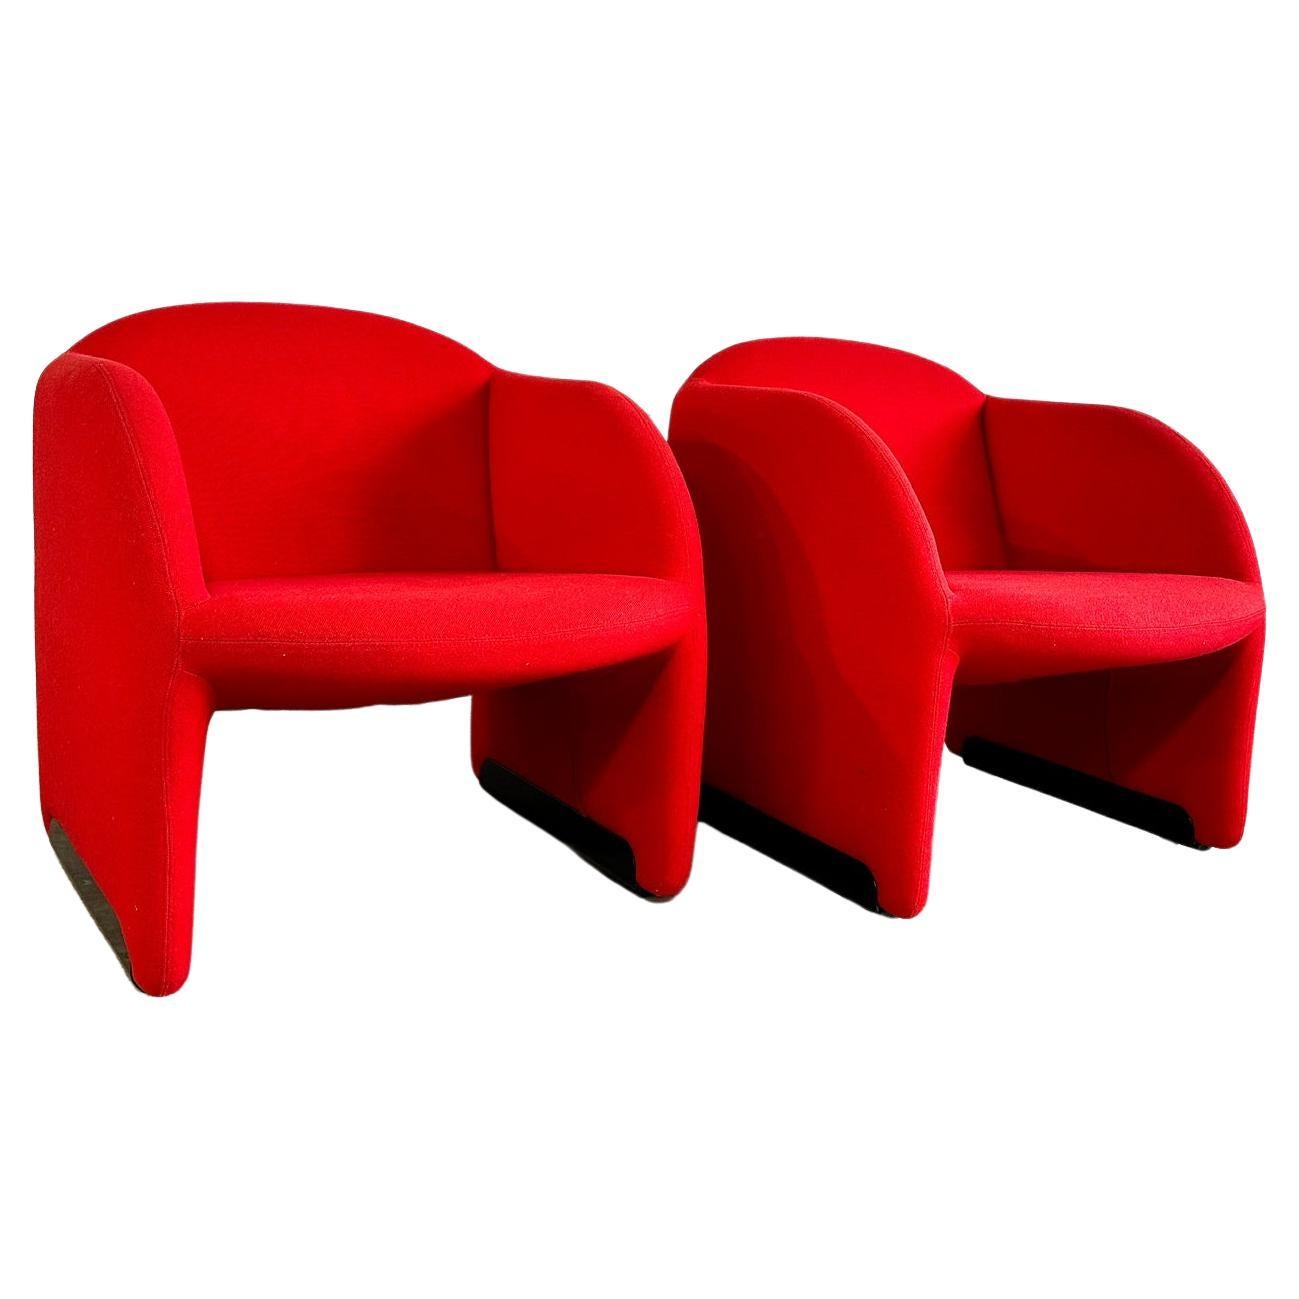 Pierre Paulin Ben Lounge Chairs pour Artifort